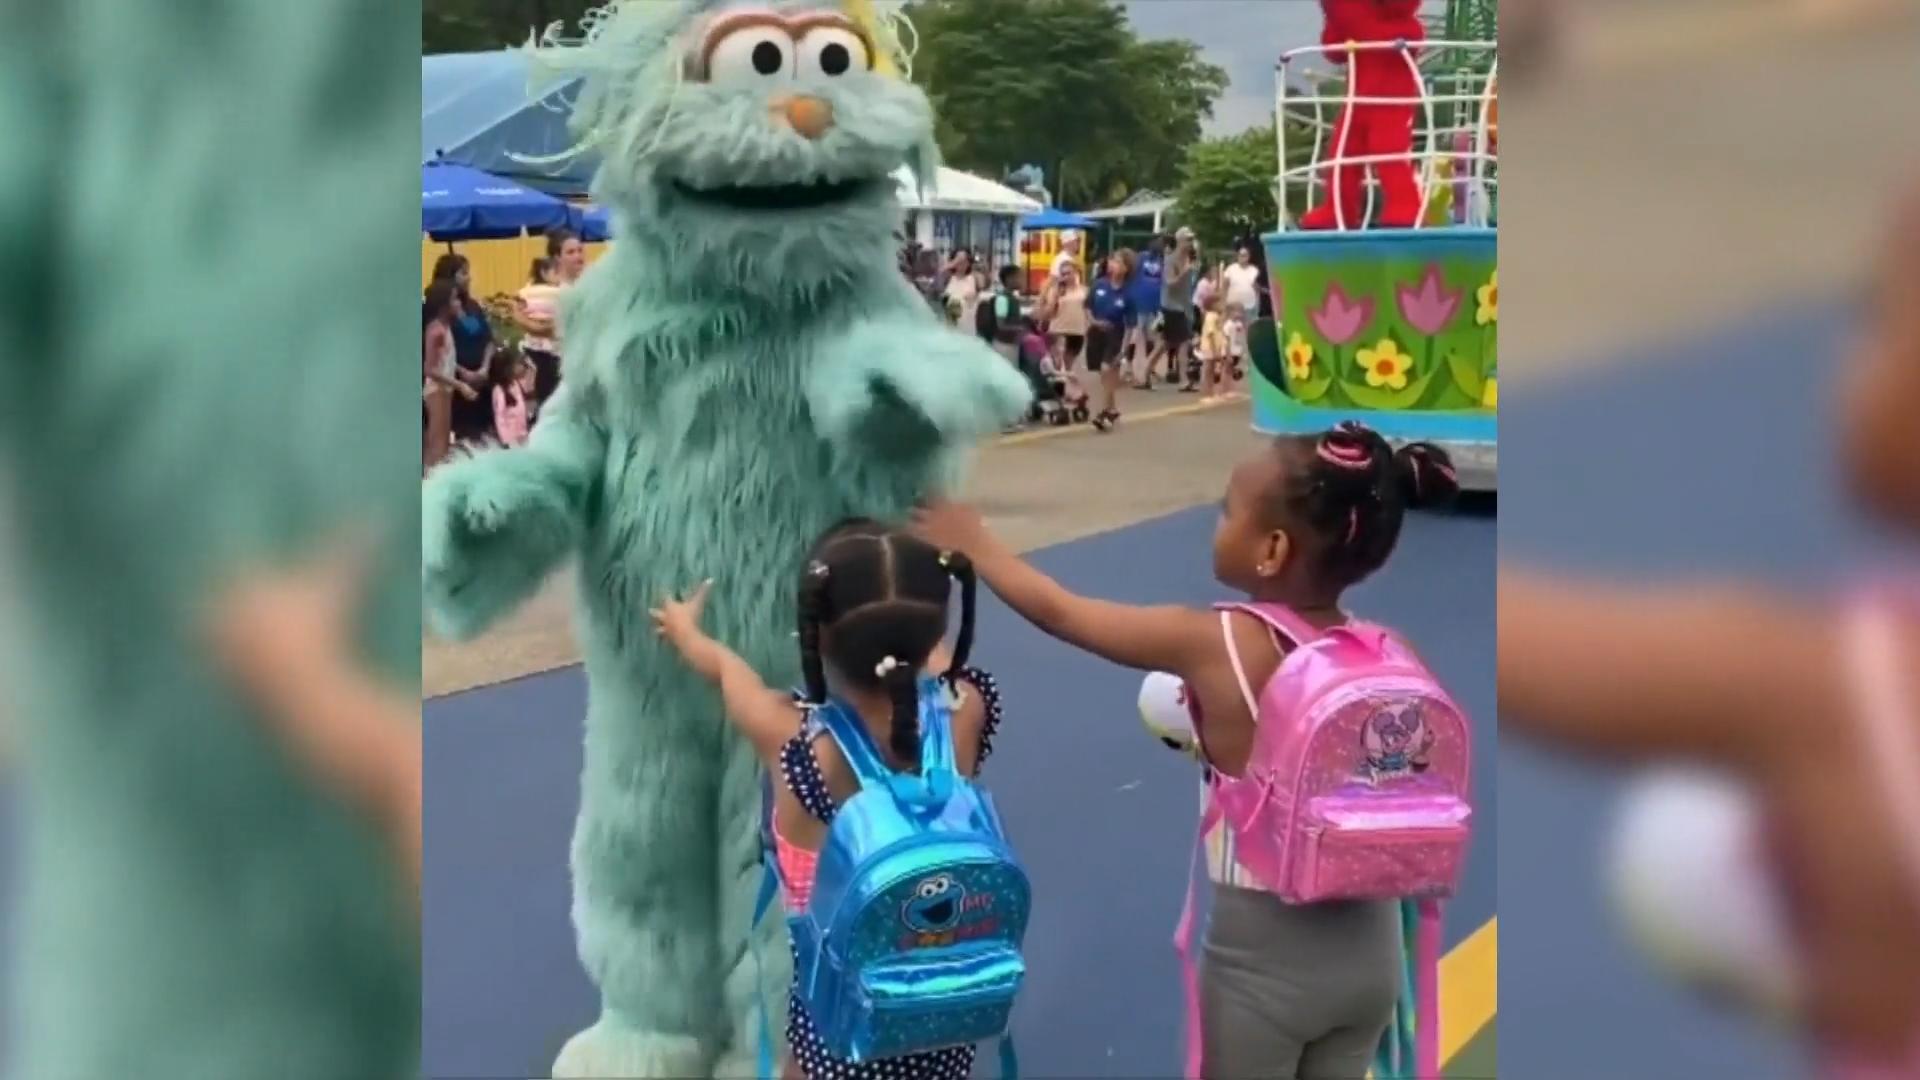 Sesamstraßen-Monster will schwarze Mädchen nicht abklatschen Rassismus-Skandal bei Parade